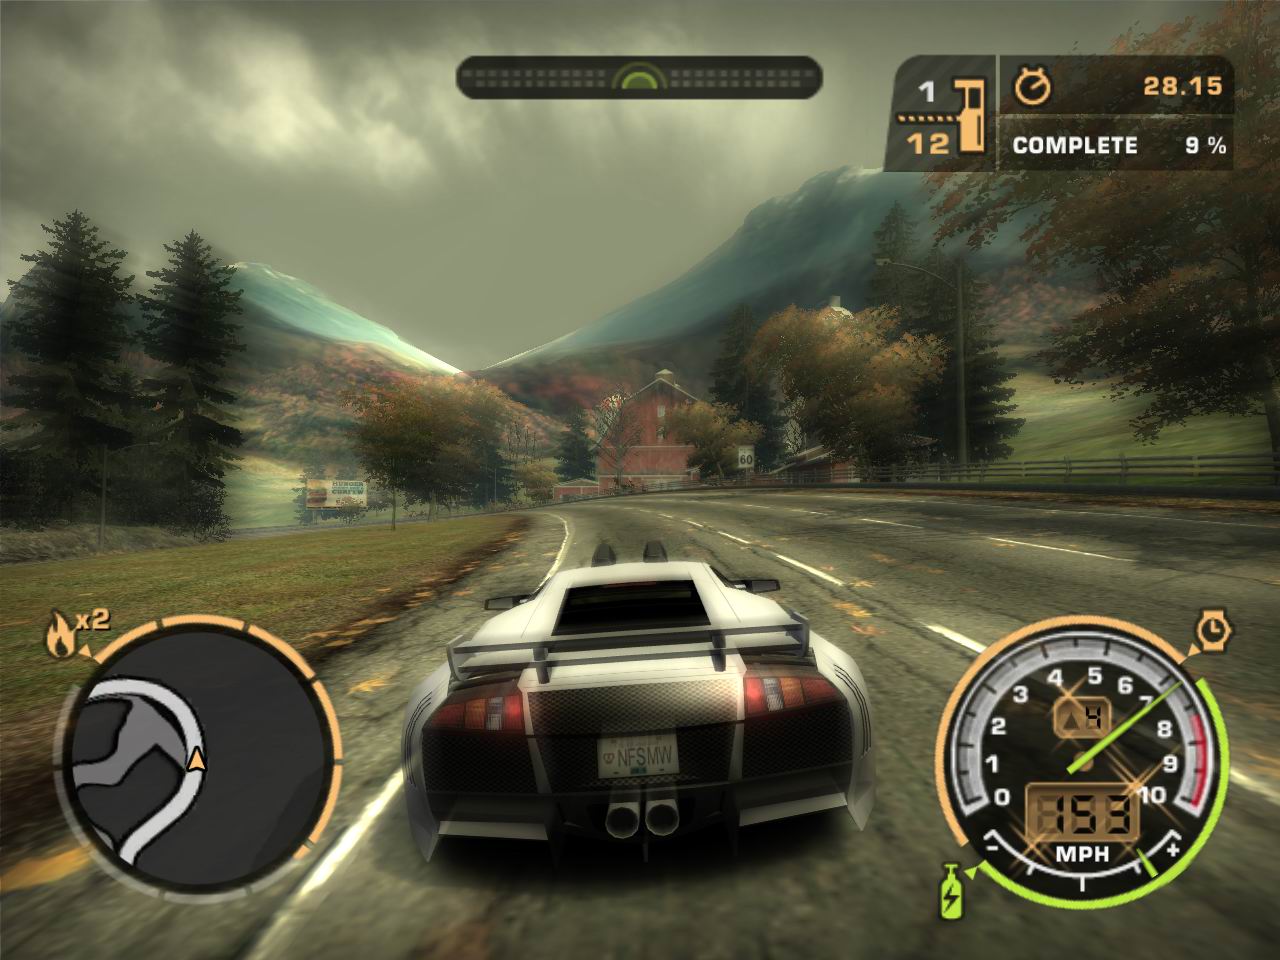 BH GAMES - A Mais Completa Loja de Games de Belo Horizonte - Need for  Speed: Most Wanted - Xbox 360